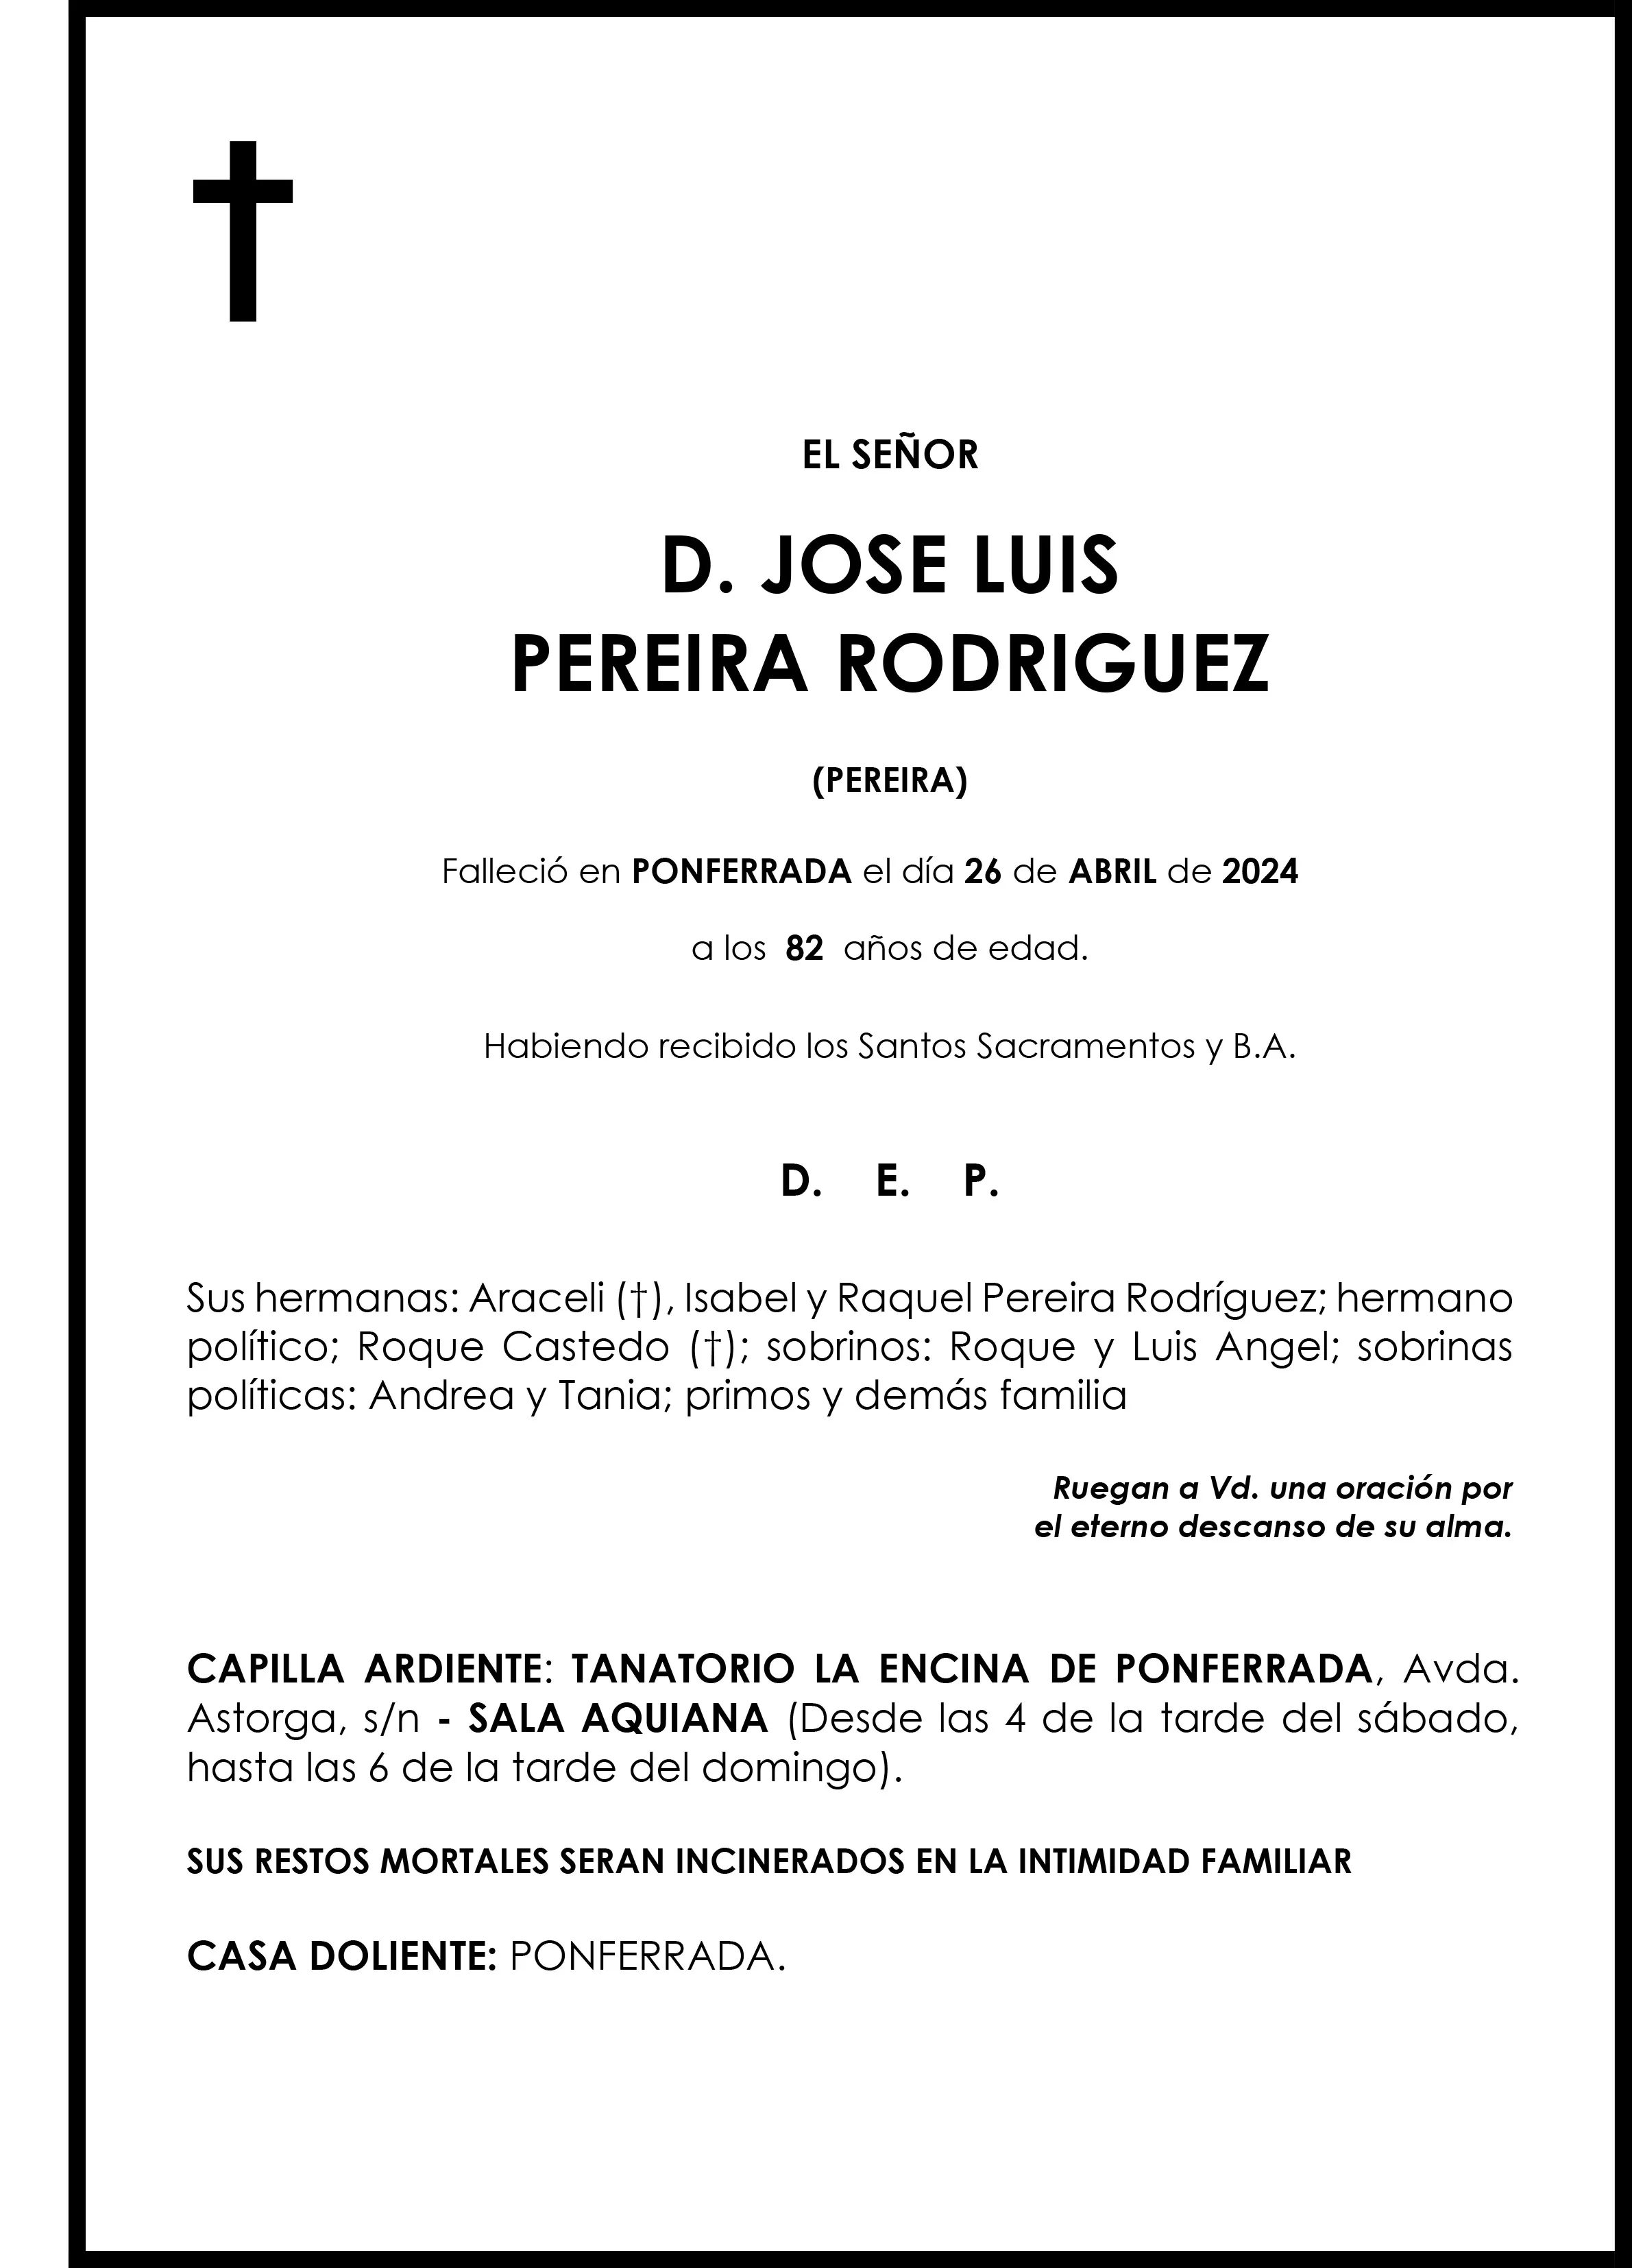 JOSE LUIS PEREIRA RODRIGUEZ